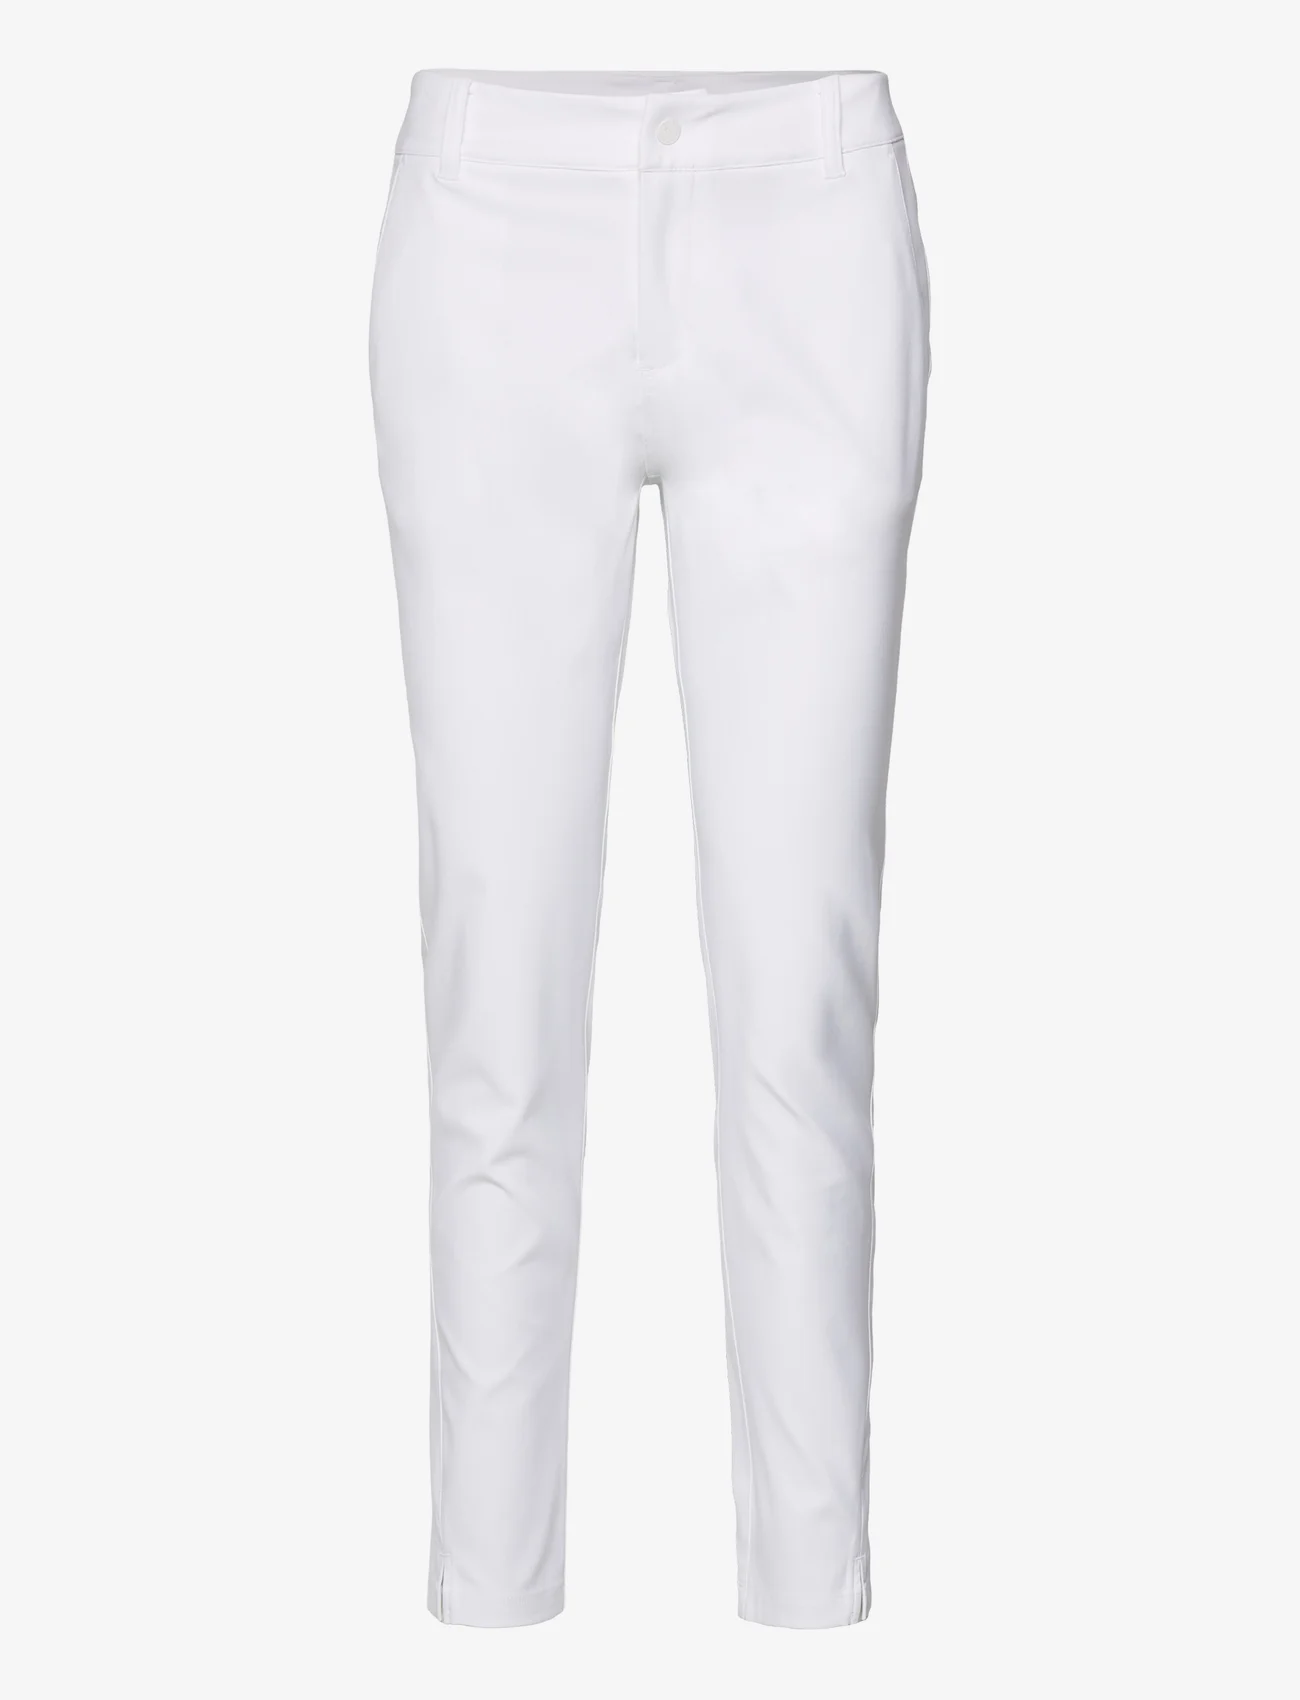 PUMA Golf - W Boardwalk Pant - bright white - 0